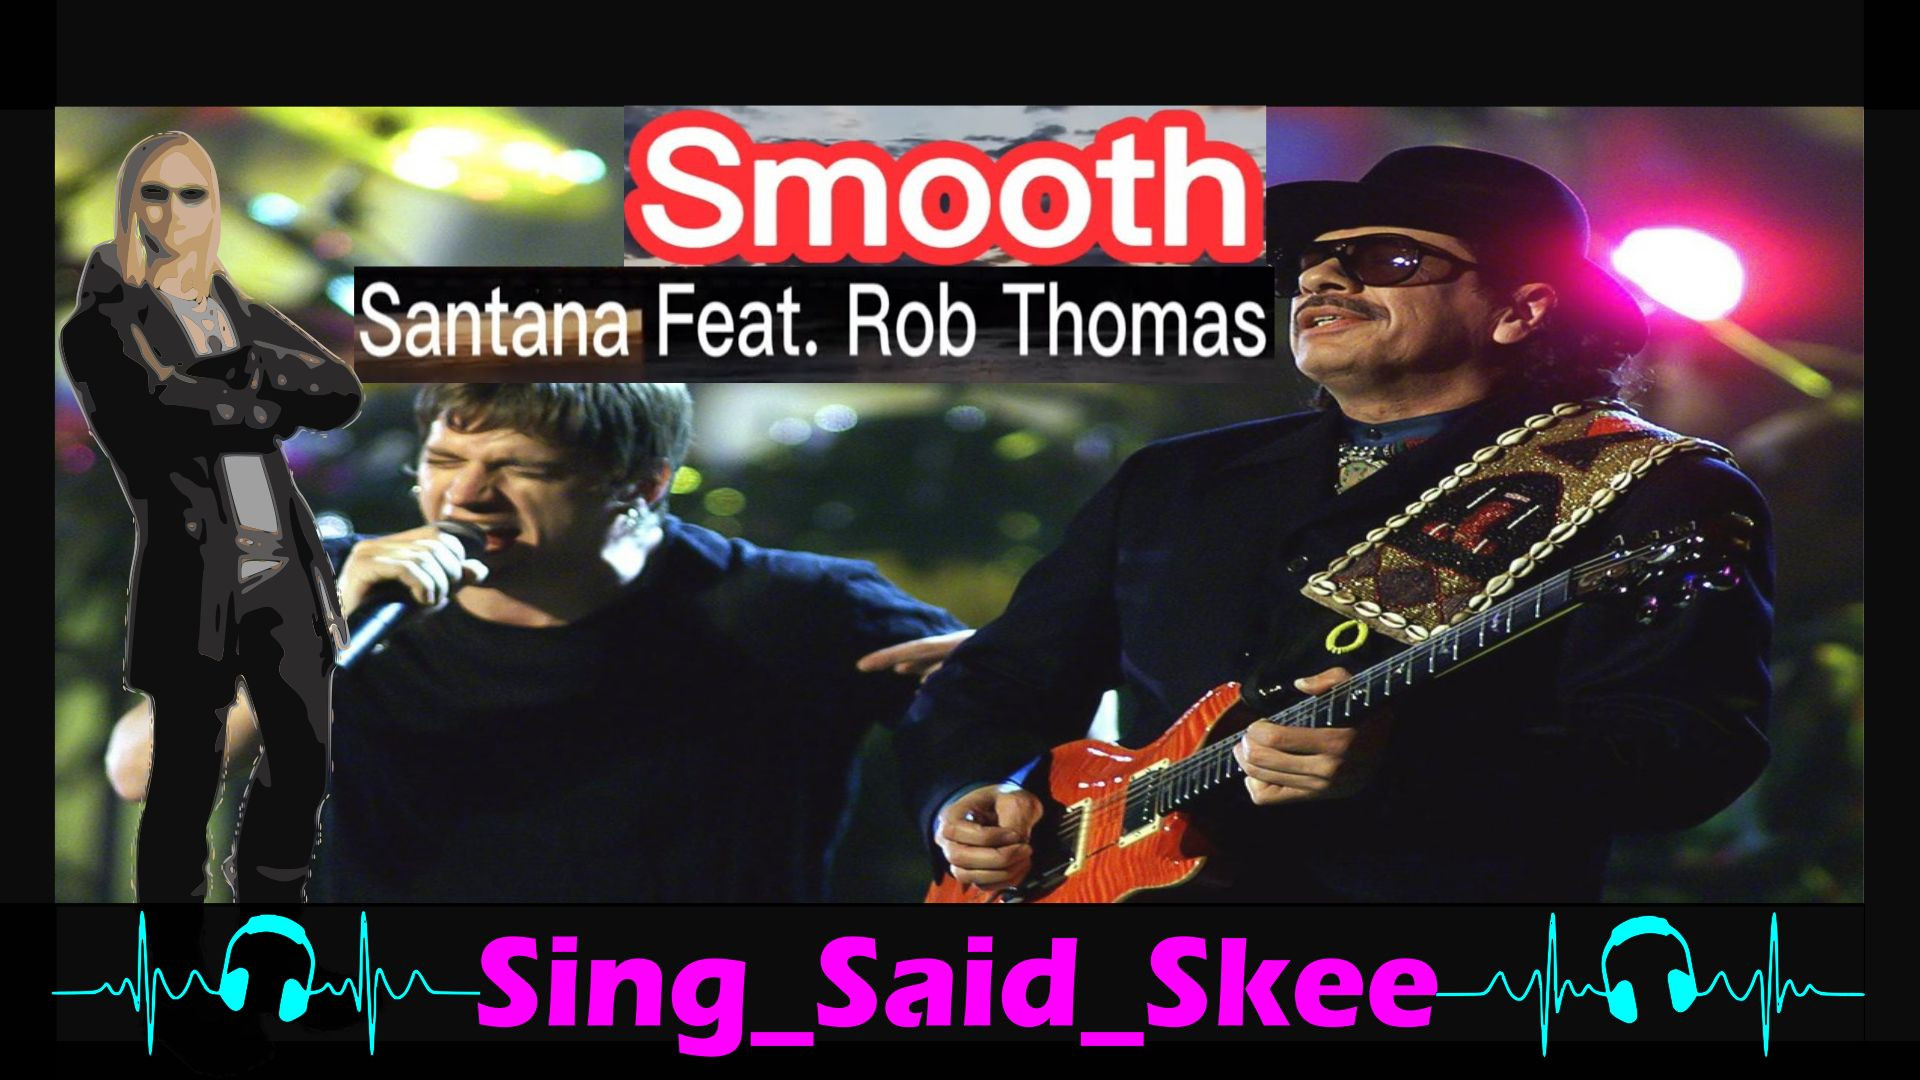 Smooth - Santana feat. Rob Thomas - Sing_Said_Skee